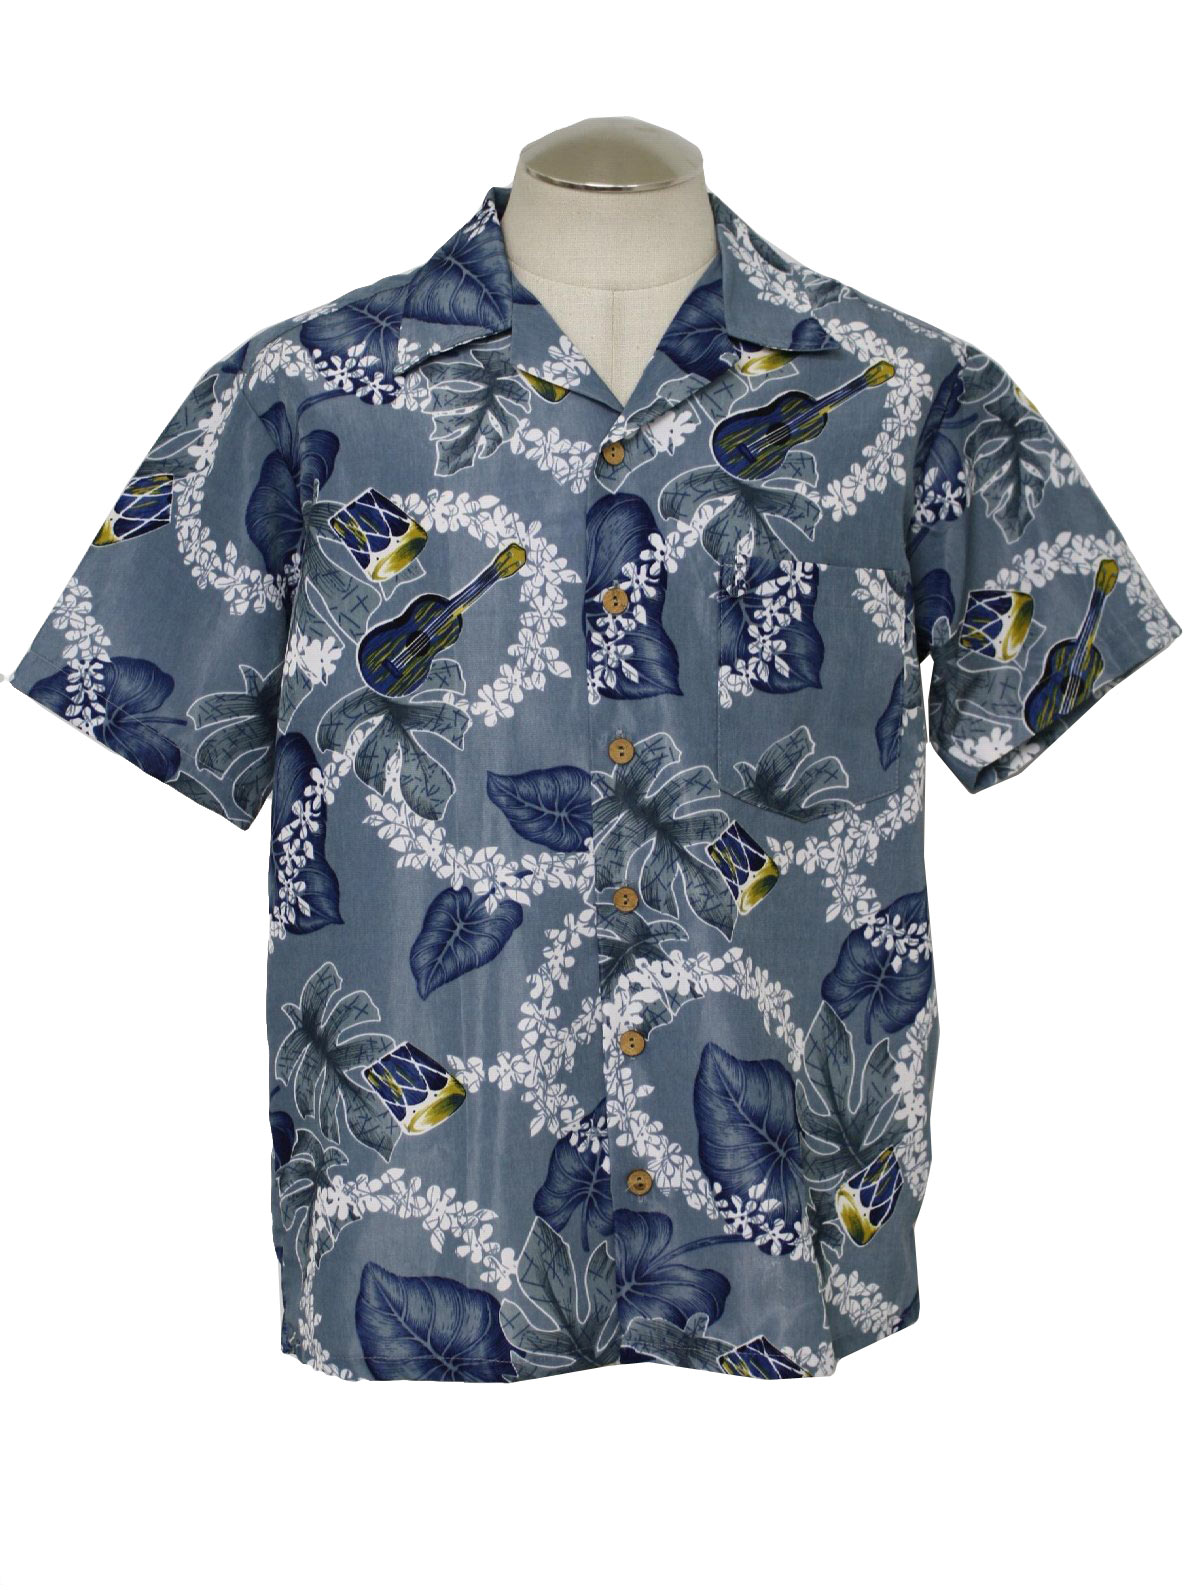 Roundy Bay by Kennington Nineties Vintage Hawaiian Shirt: 90s -Roundy